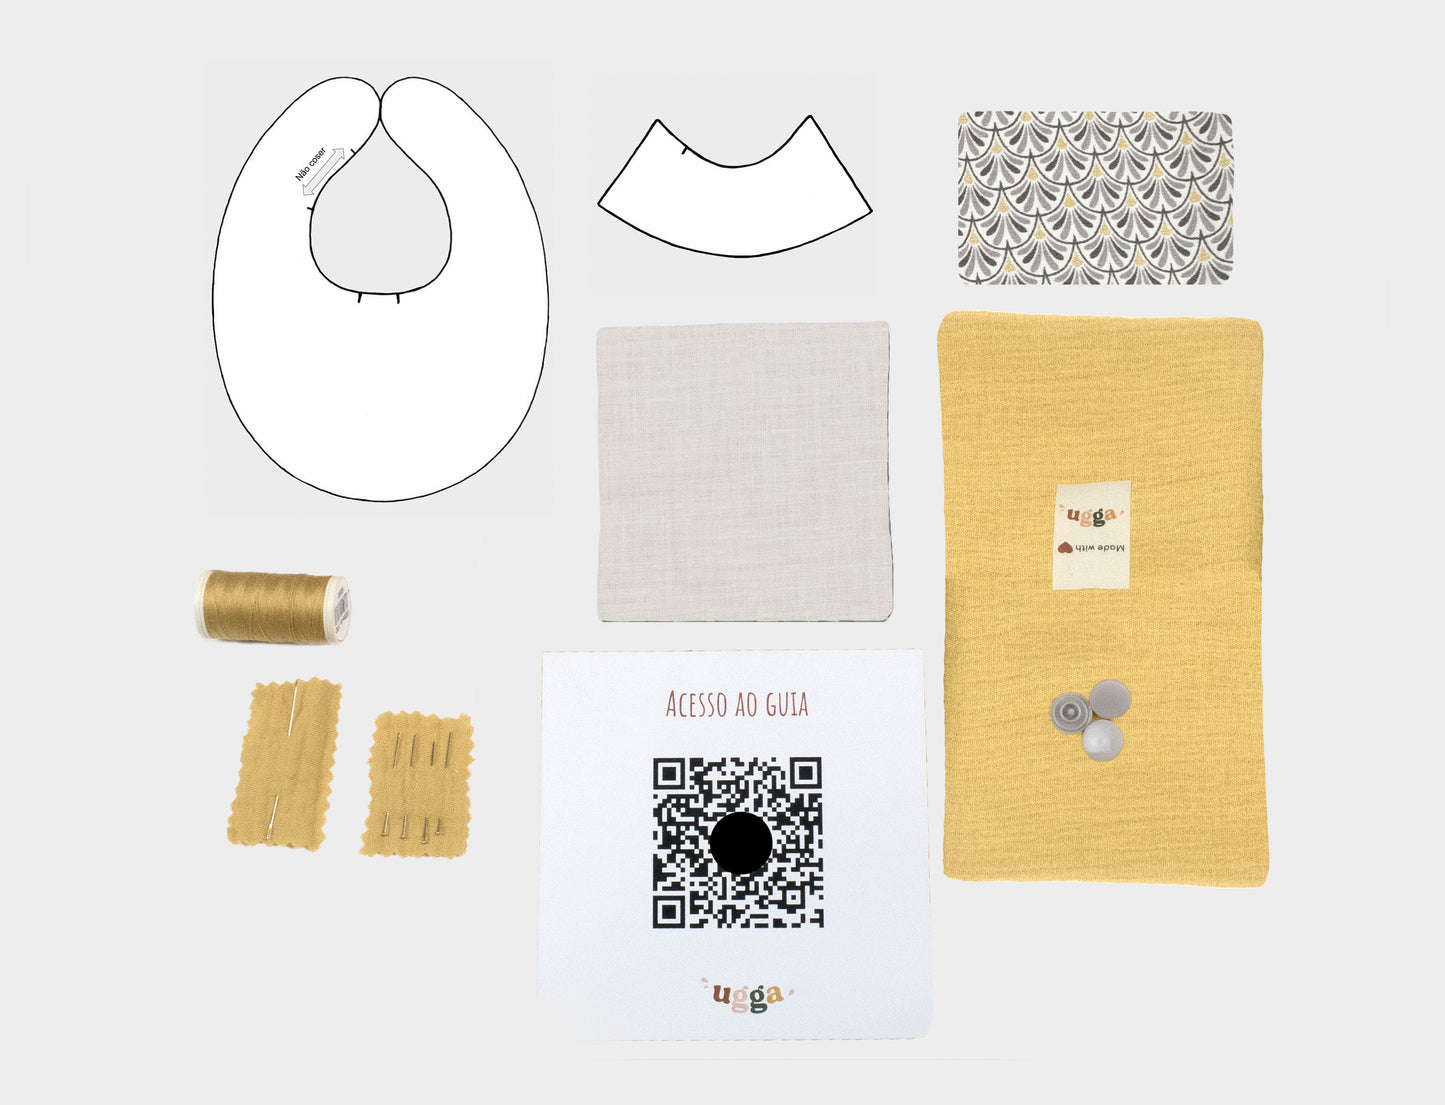 DIY Sewing Kit - Collar Bib